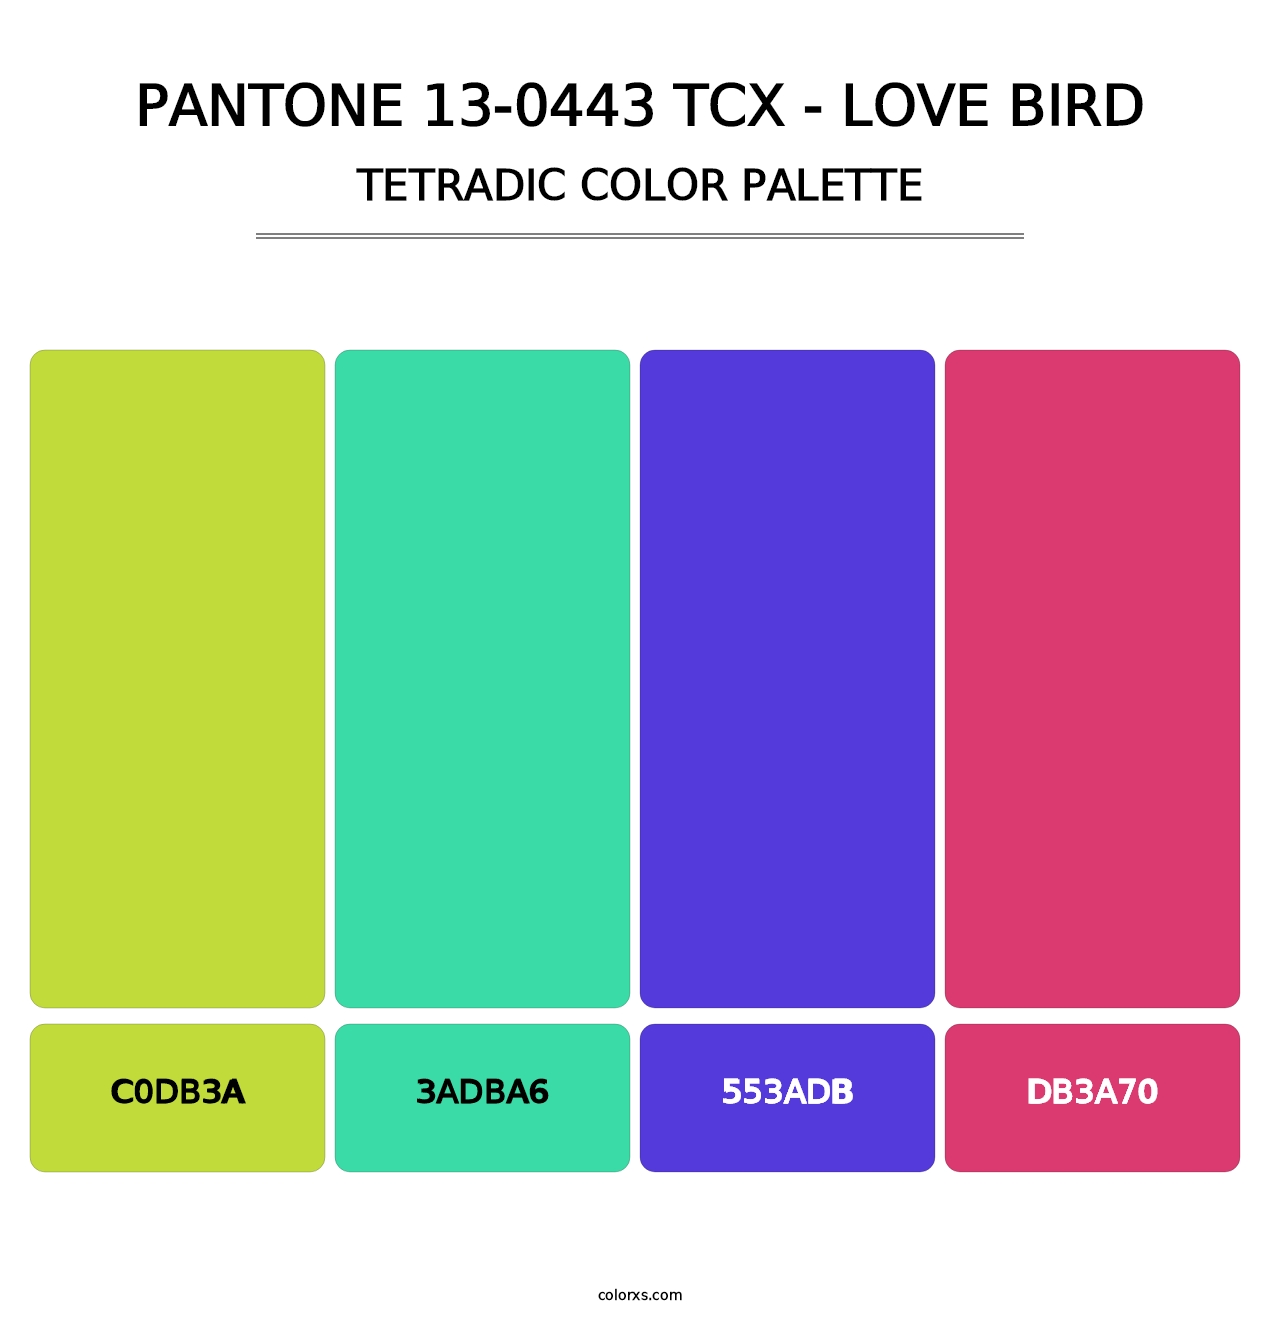 PANTONE 13-0443 TCX - Love Bird - Tetradic Color Palette